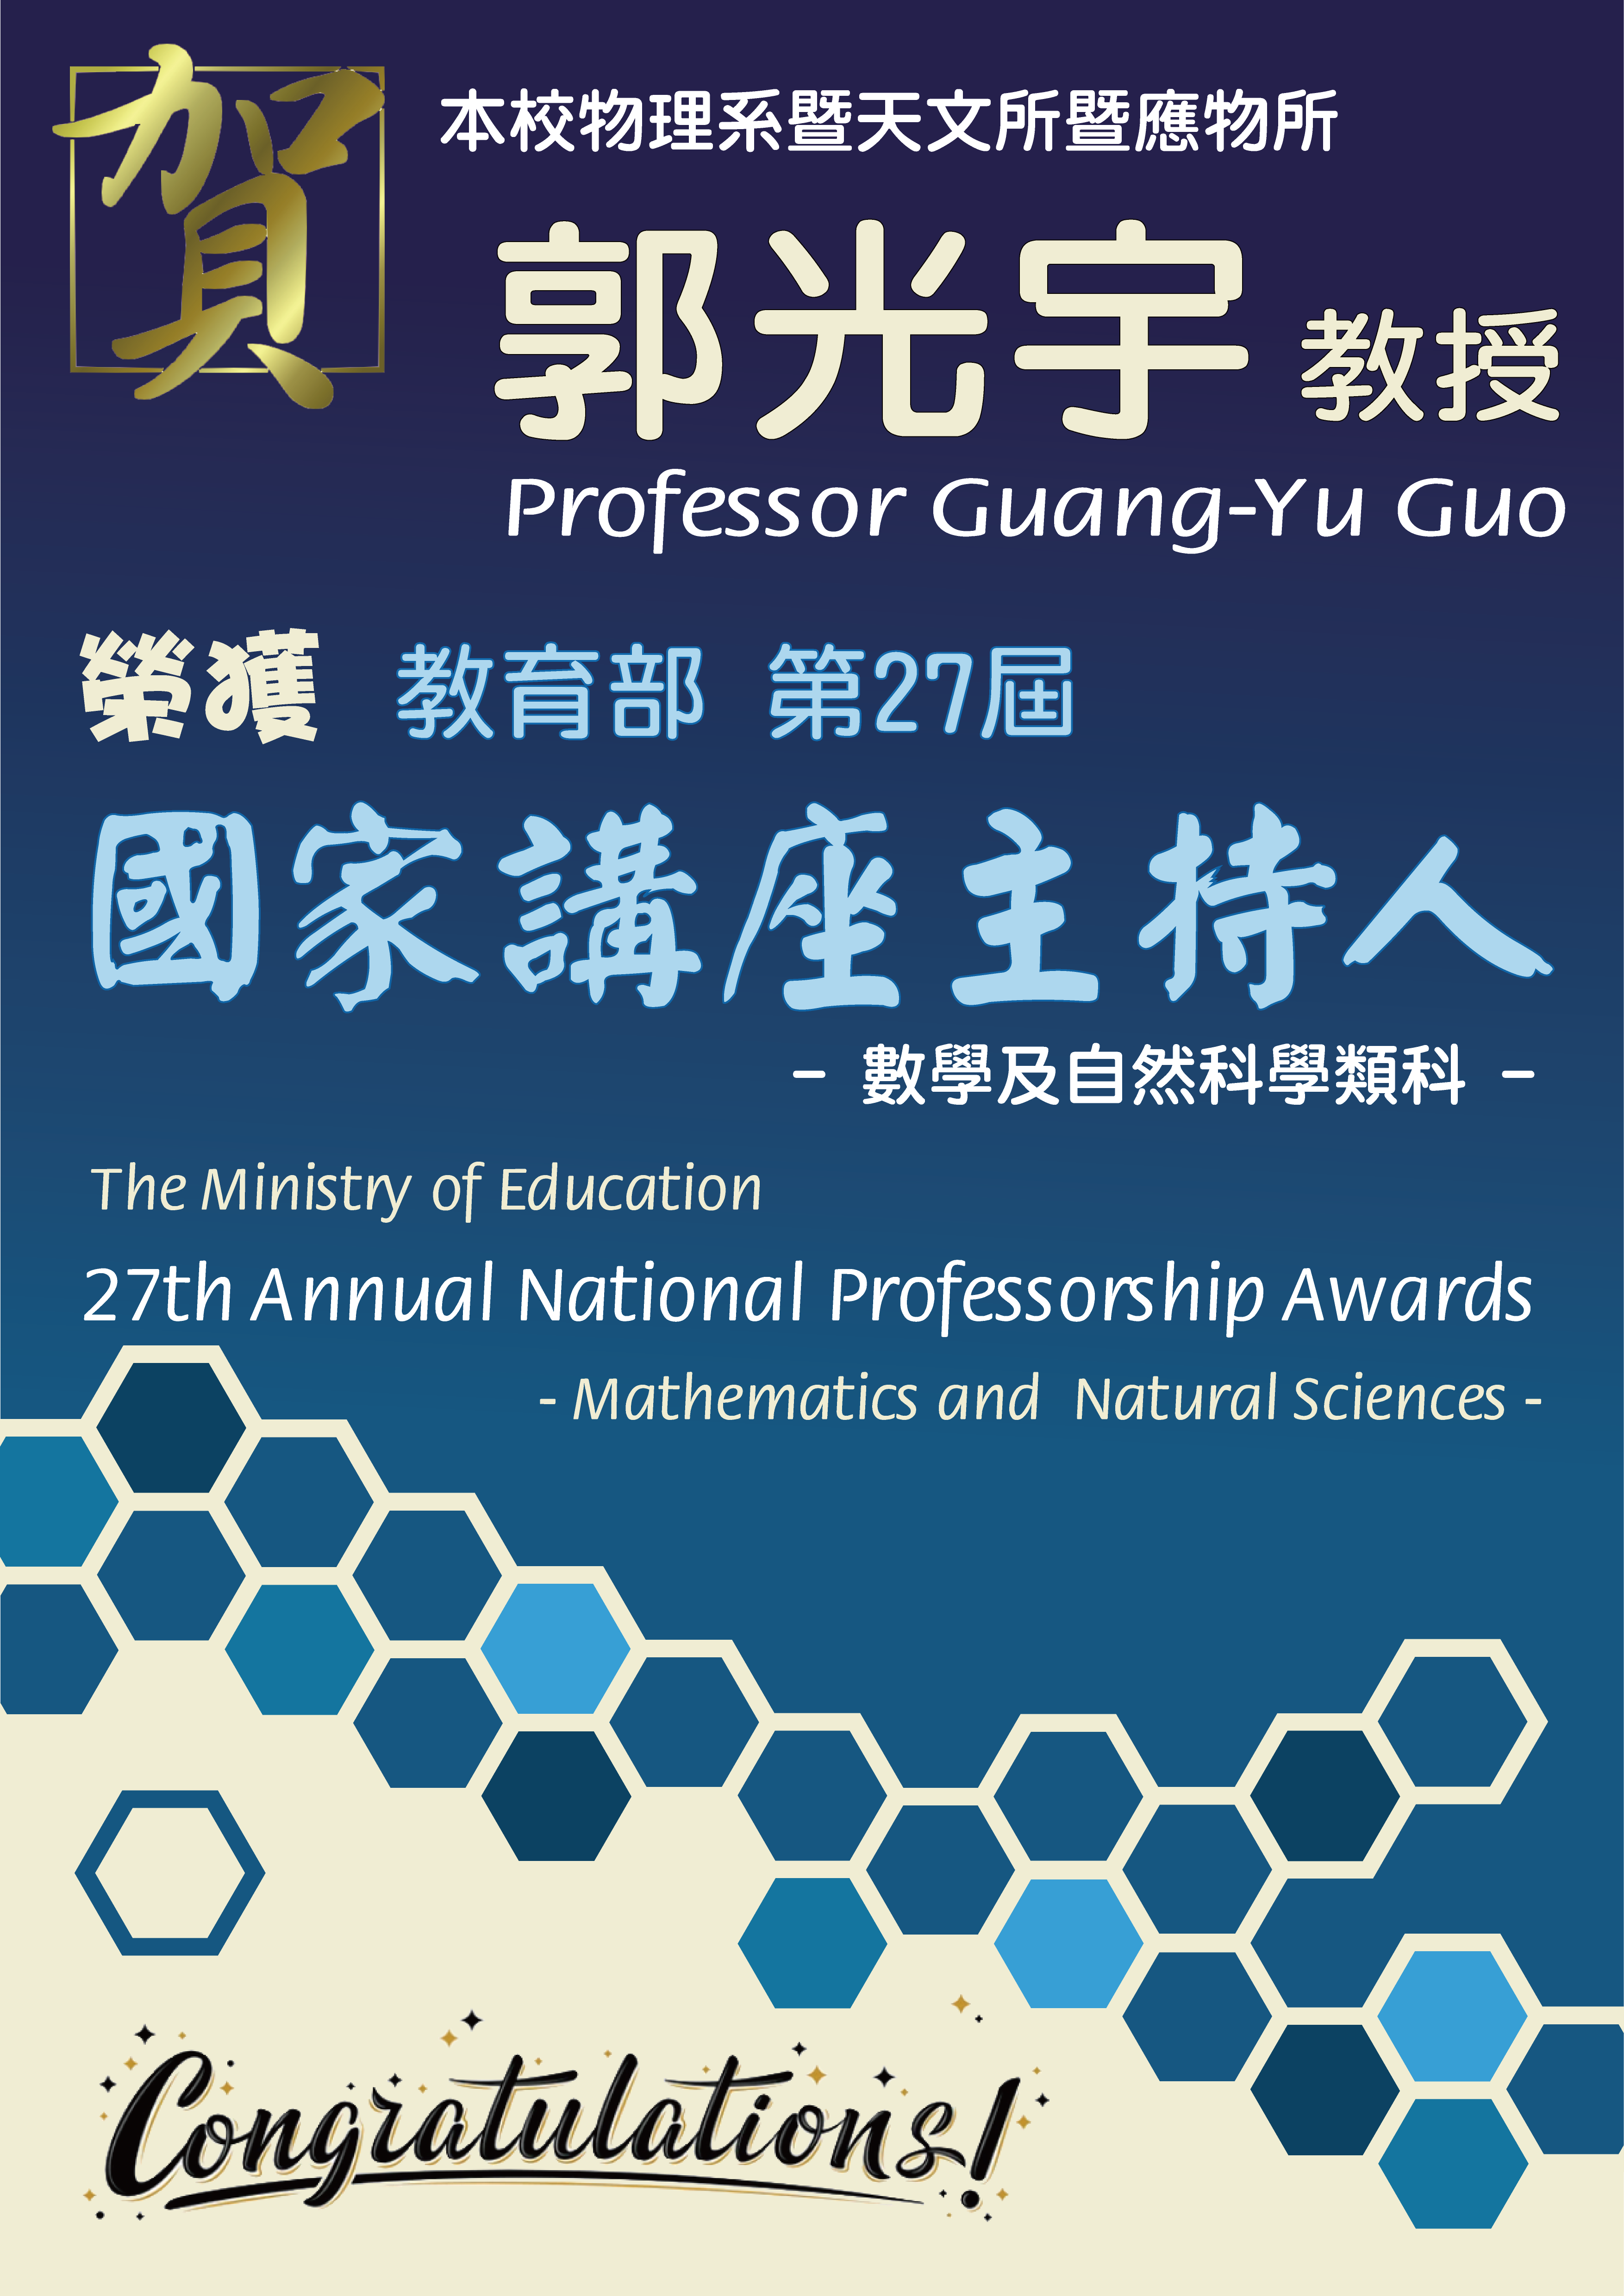 《賀》本系 郭光宇 教授 Prof. Guang-Yu Guo 榮獲 教育部 第27屆《國家講座主持人》- 數學及自然科學類科 (The Ministry of Education's 27th Annual National Professorship Awards - Mathematics and Natural Sciences)